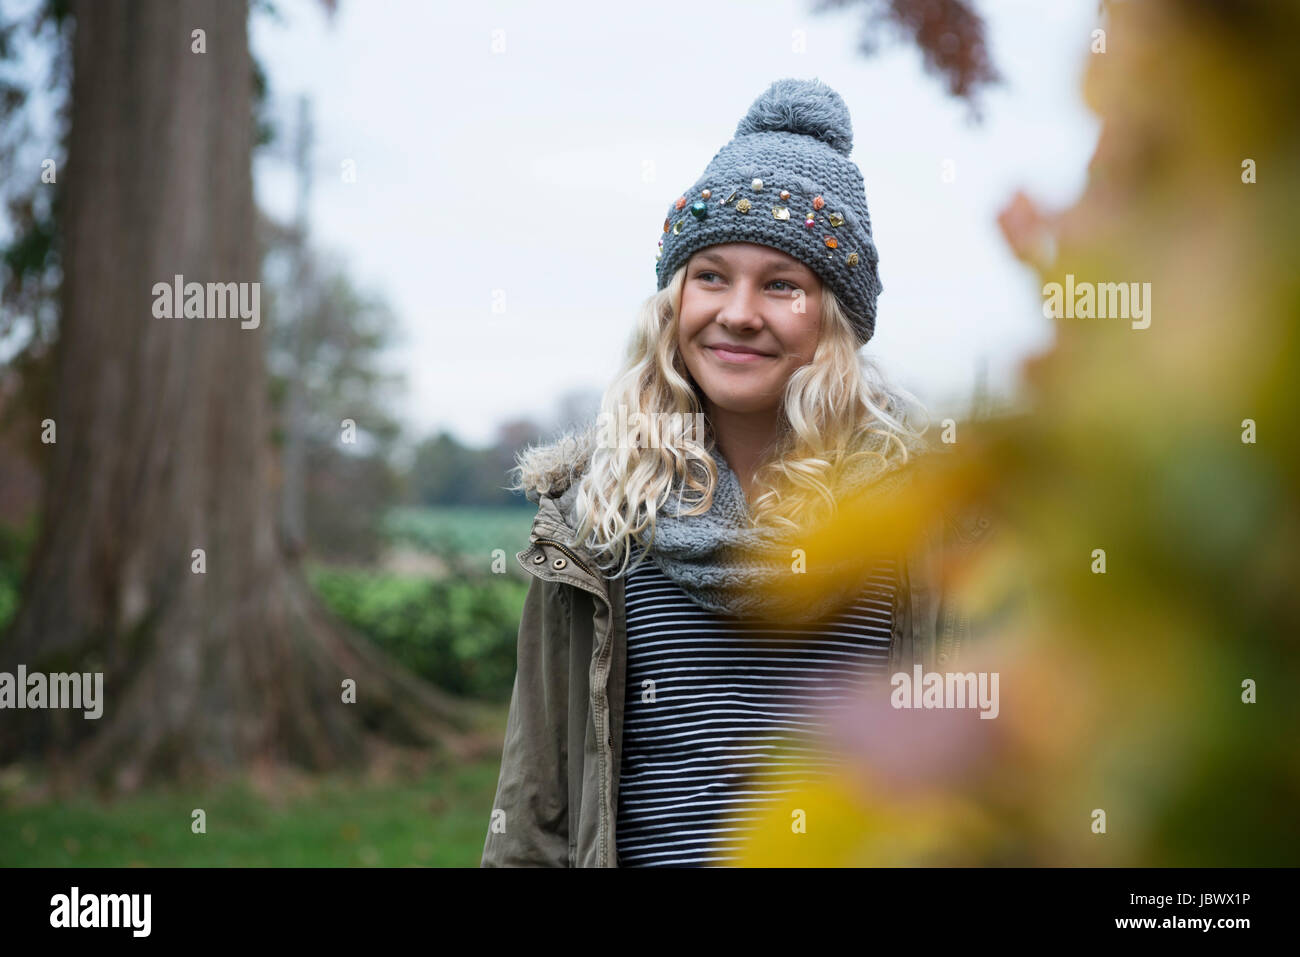 Girl in knit hat strolling in rural landscape Stock Photo